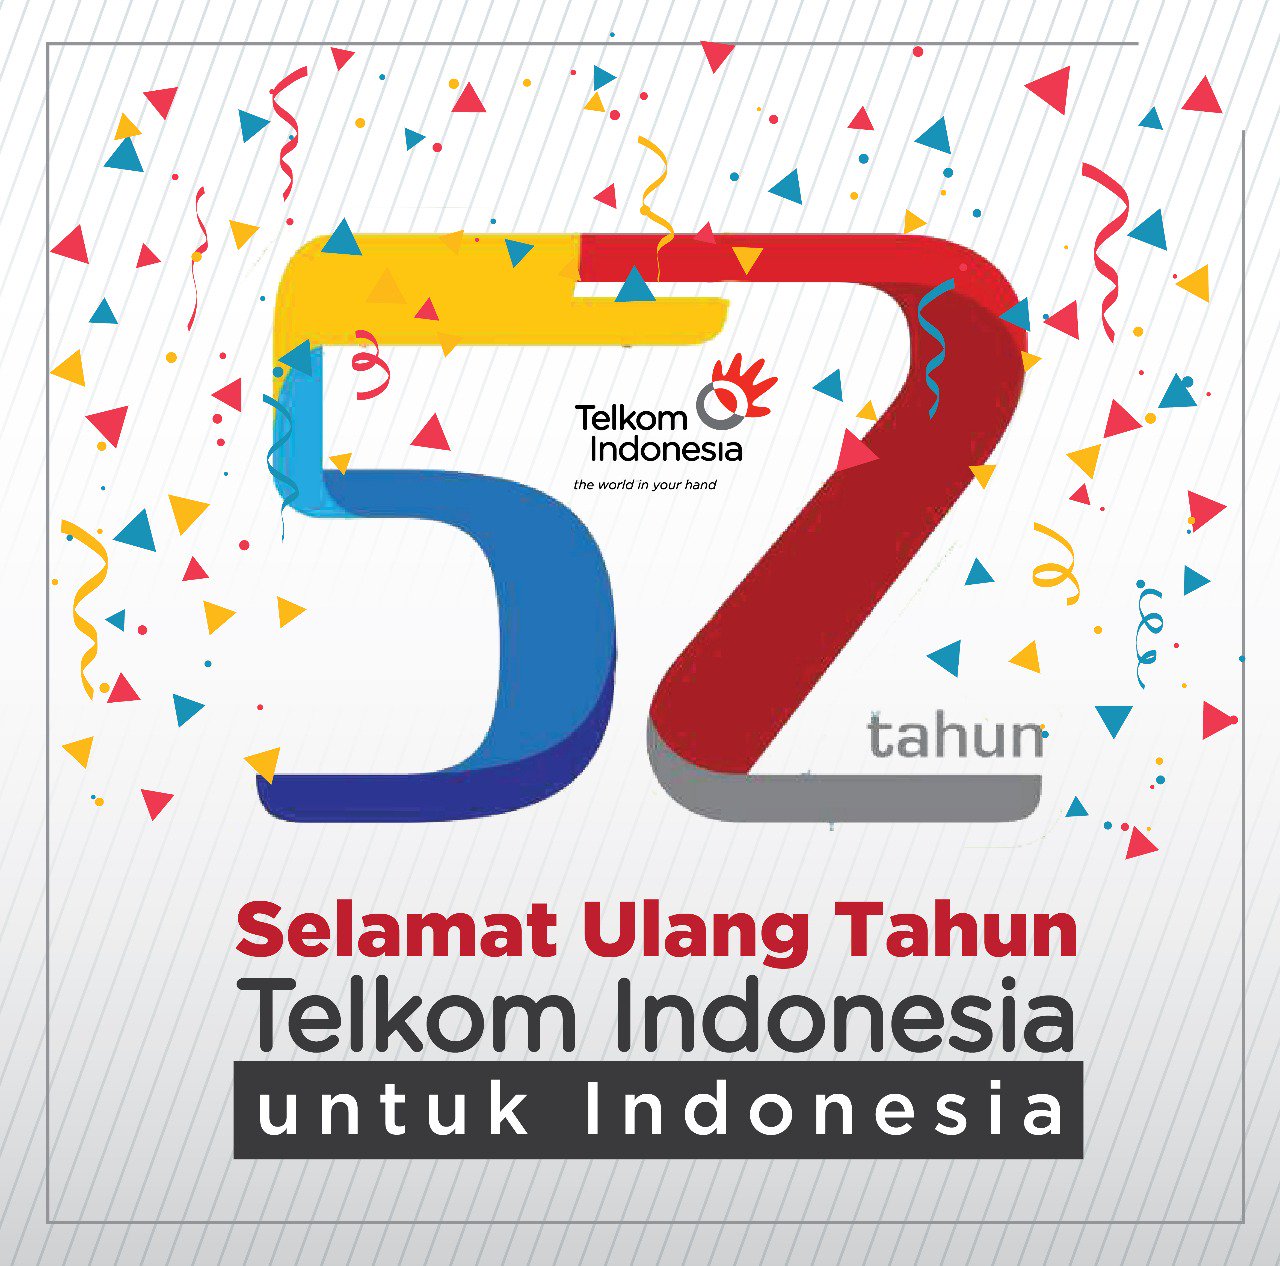 Telkom Indonesia On Twitter Buatlah Kartu Ucapan Digital Selamat Ulang Tahun Telkomindonesia Seperti Contoh Pastikan Mengikuti Beberapa Syarat Pembuatan Gambarnya S T Co 85k7fqfgs8